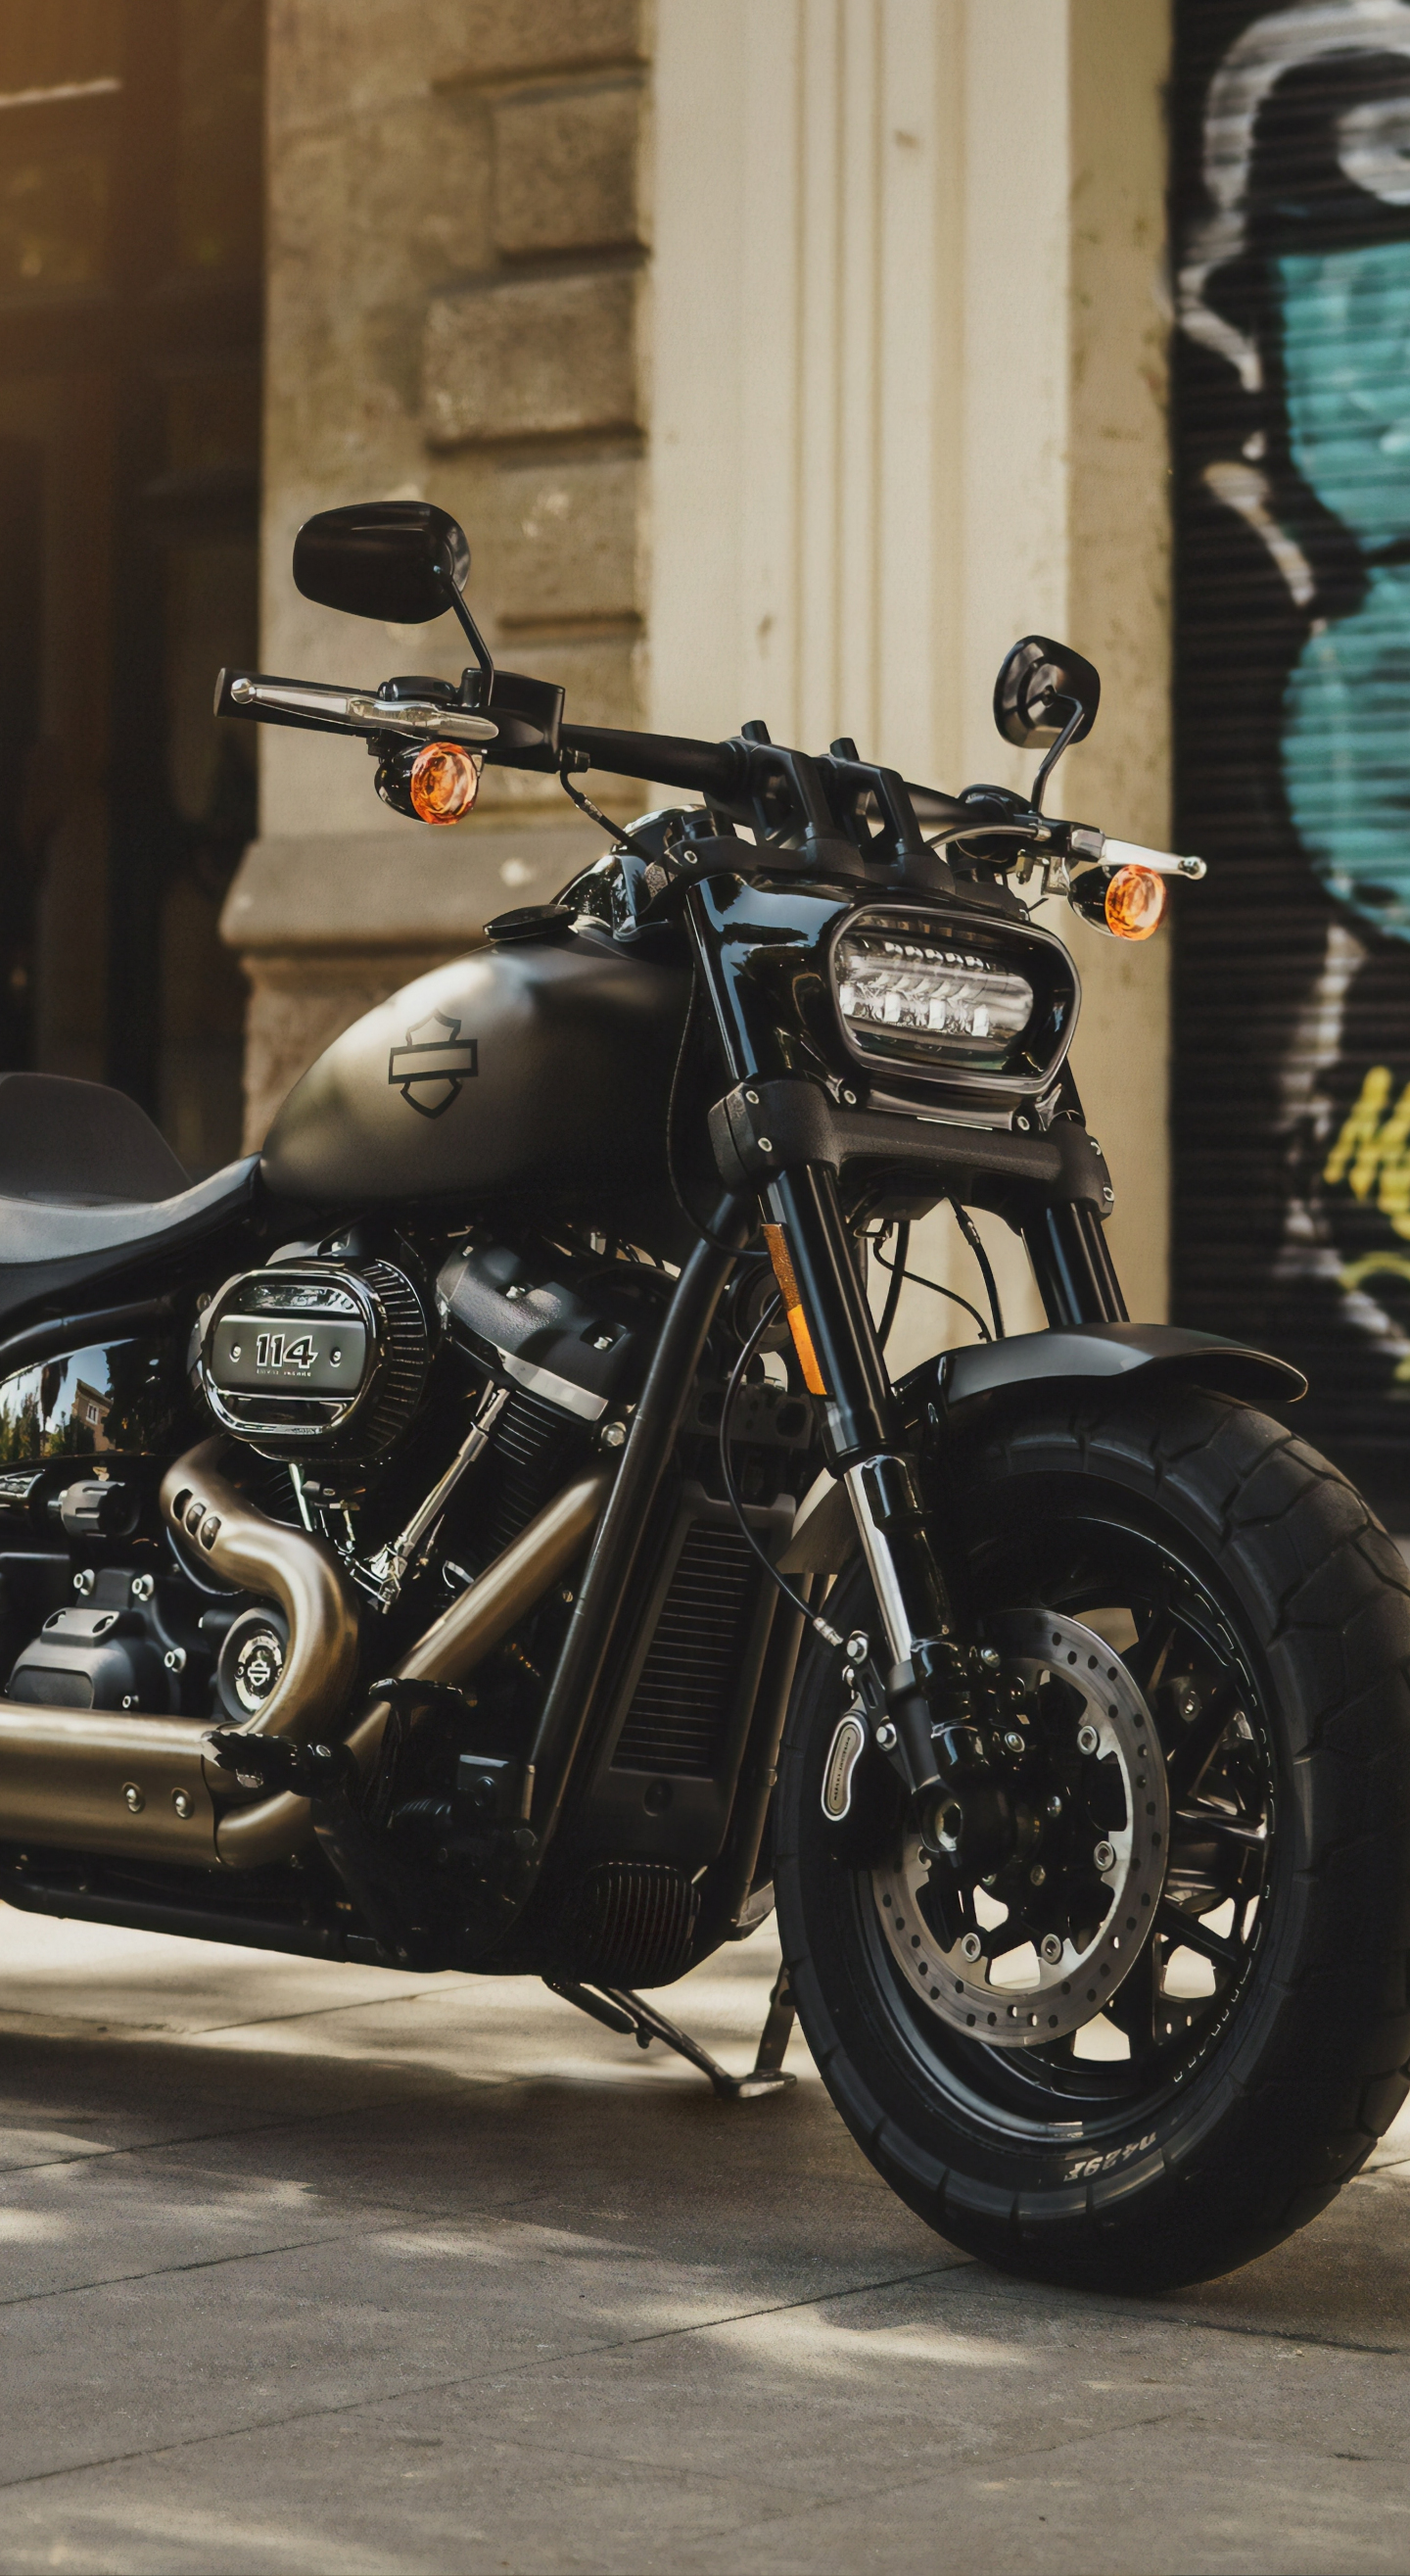 2019 Harley-Davidson, motorcycle, 1440x2630 wallpaper